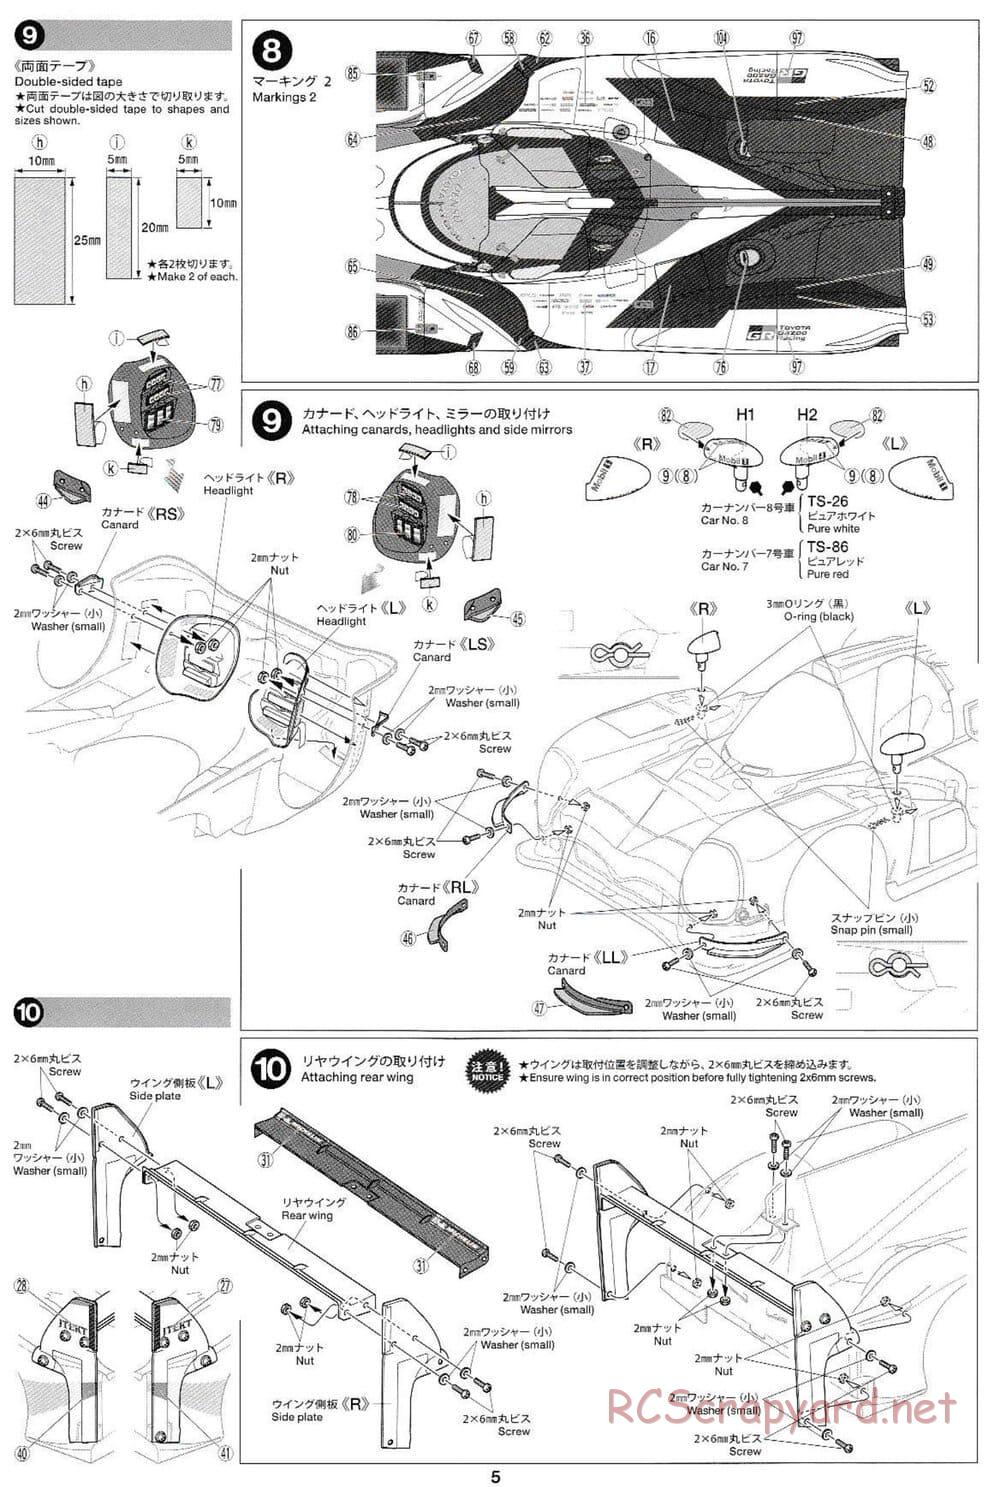 Tamiya - Toyota Gazoo Racing TS050 HYBRID - F103GT Chassis - Body Manual - Page 5